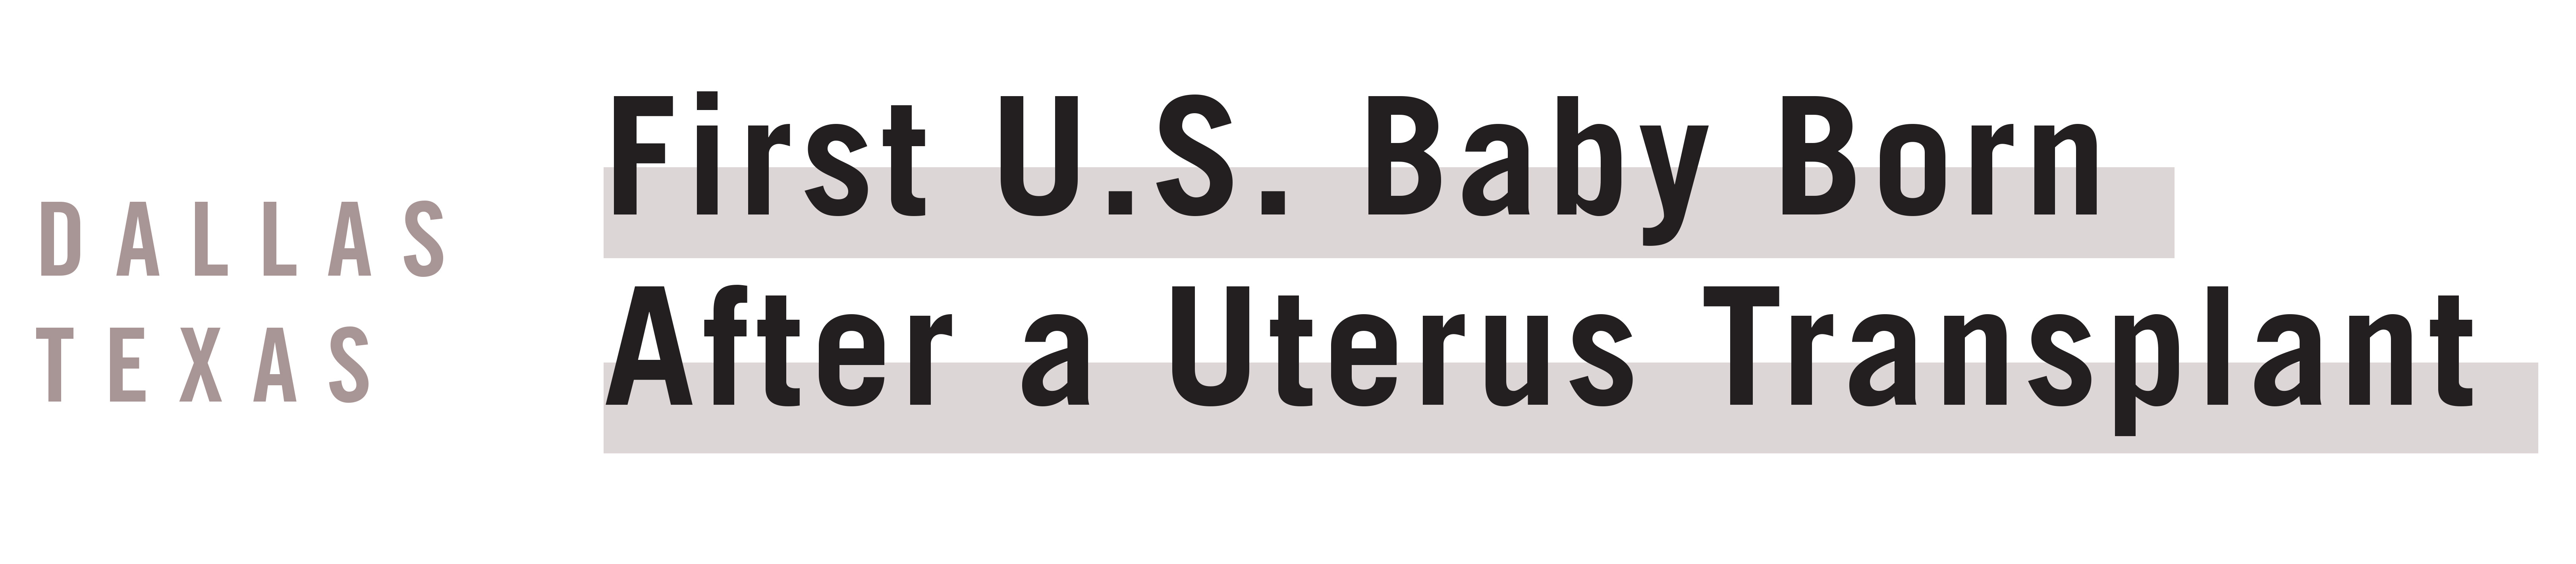 First Baby - uterus transplant